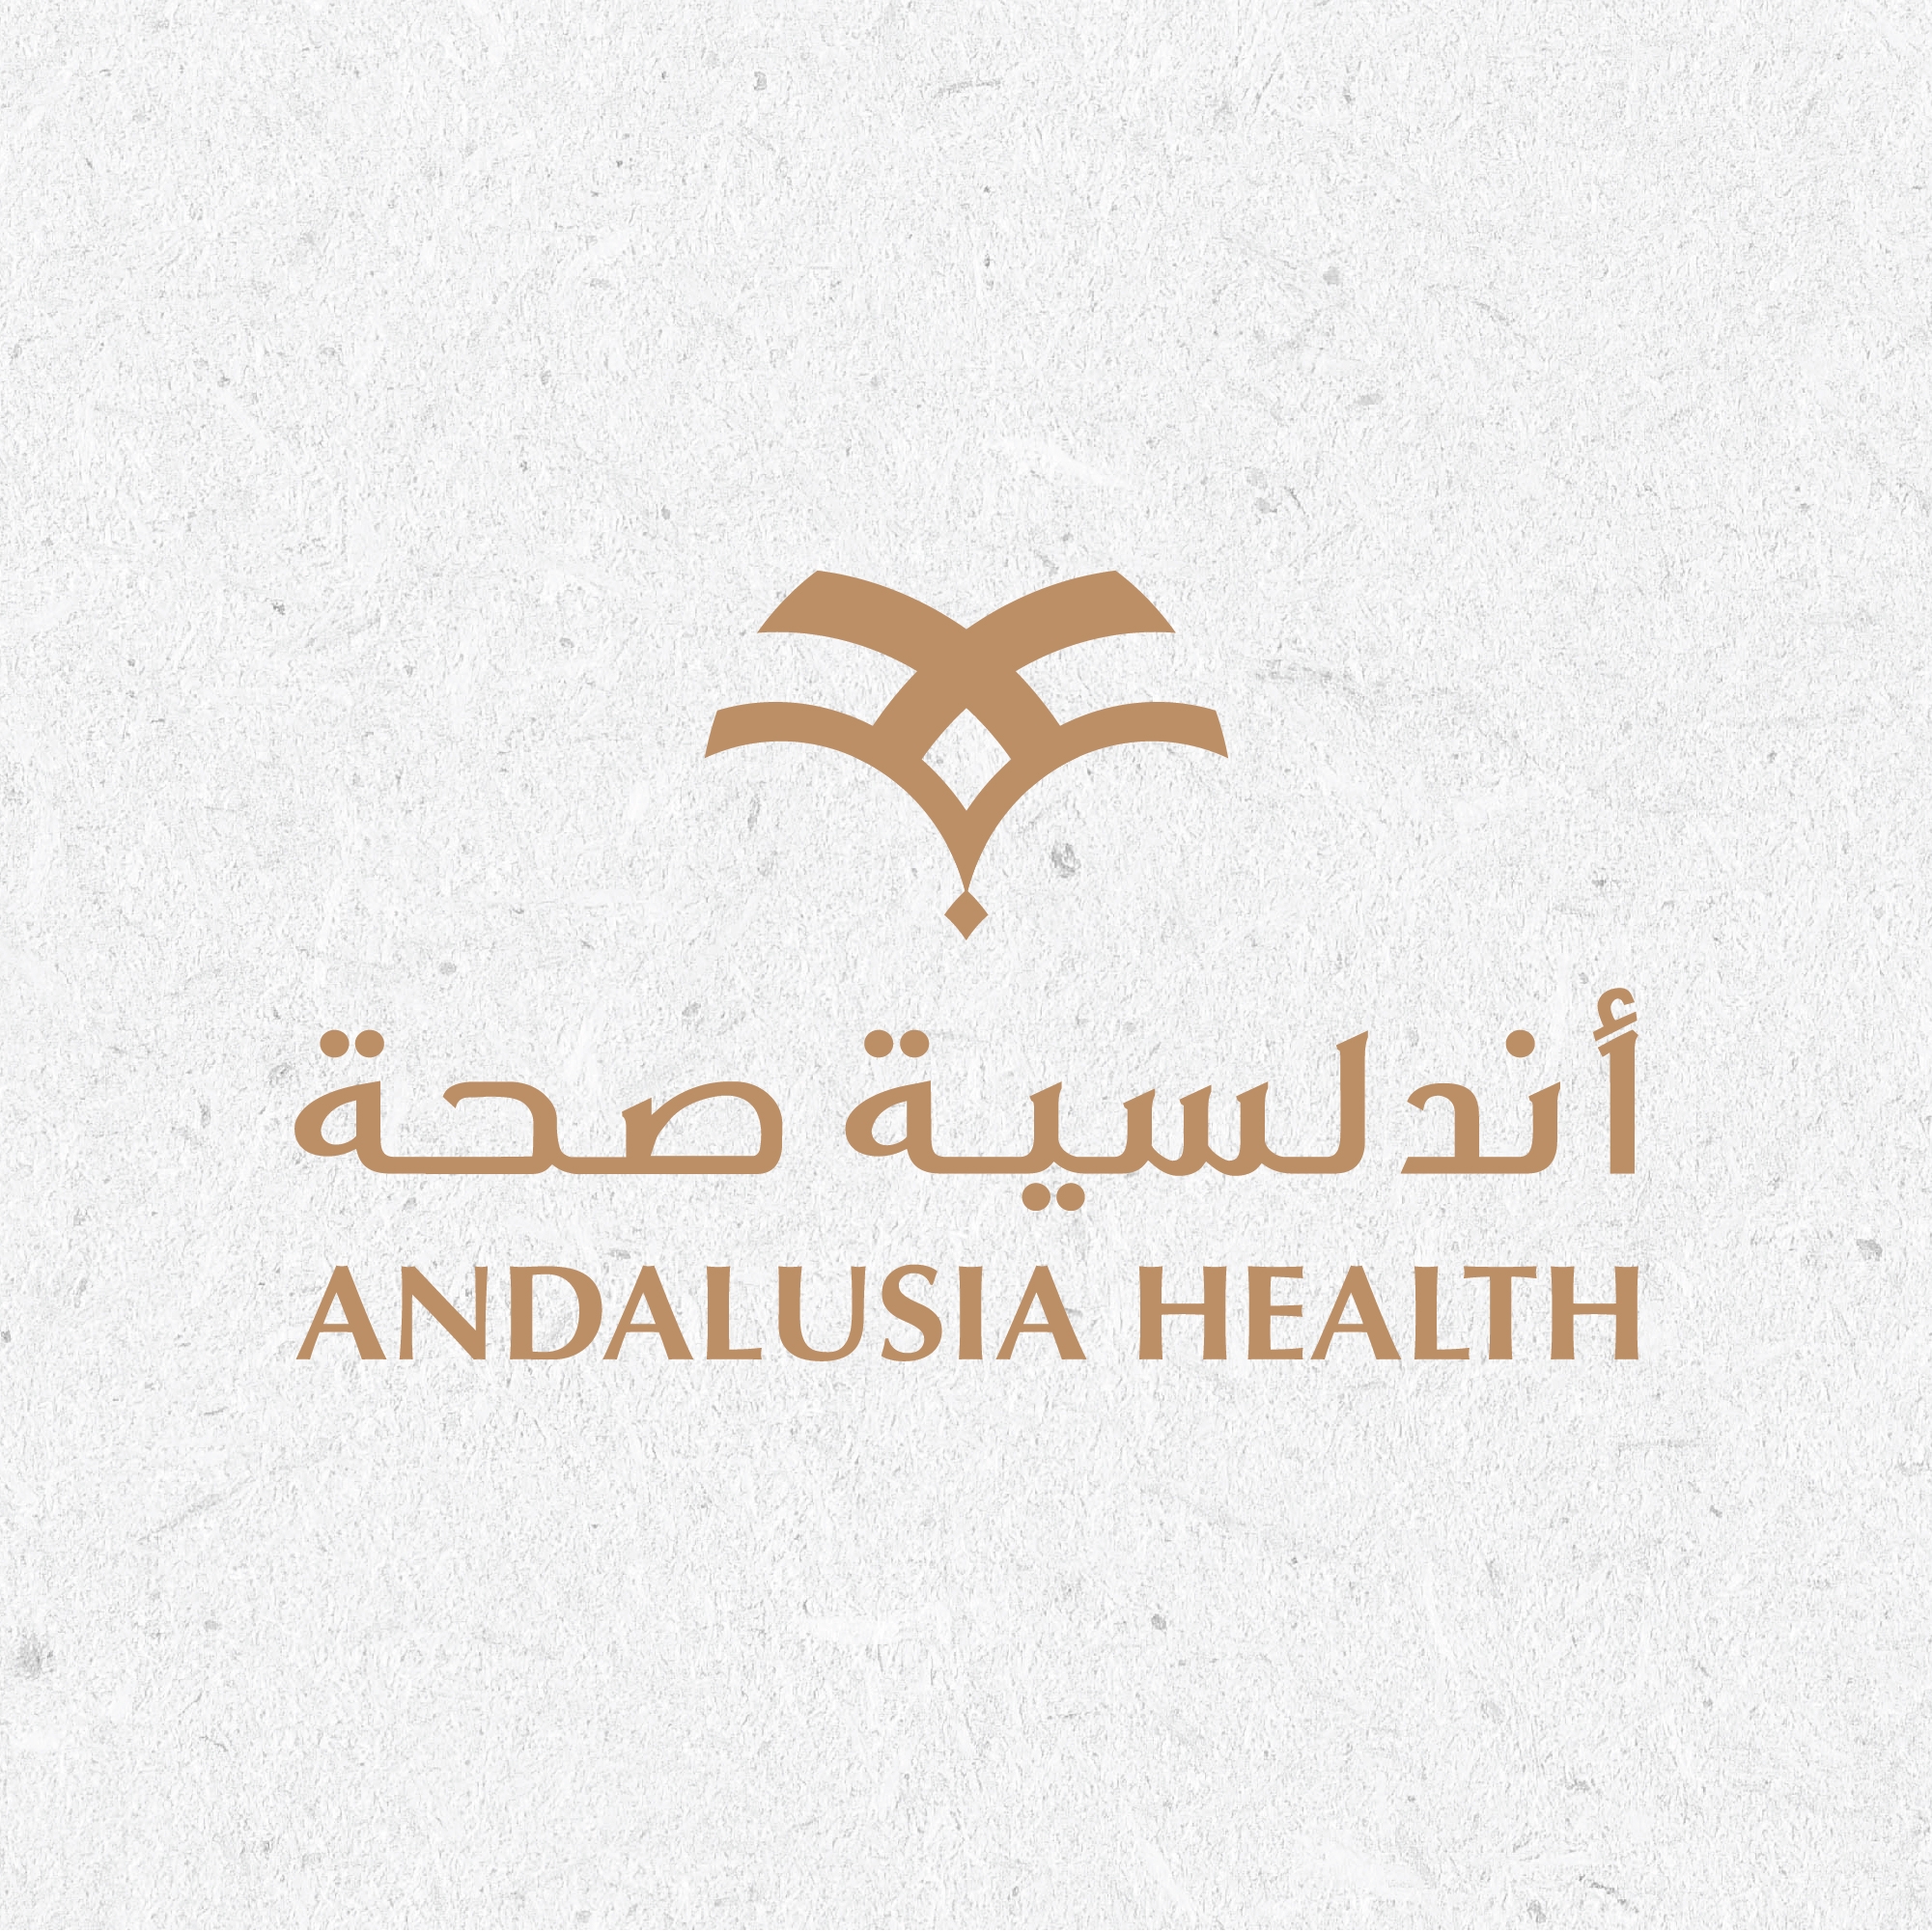 Andalusia Health